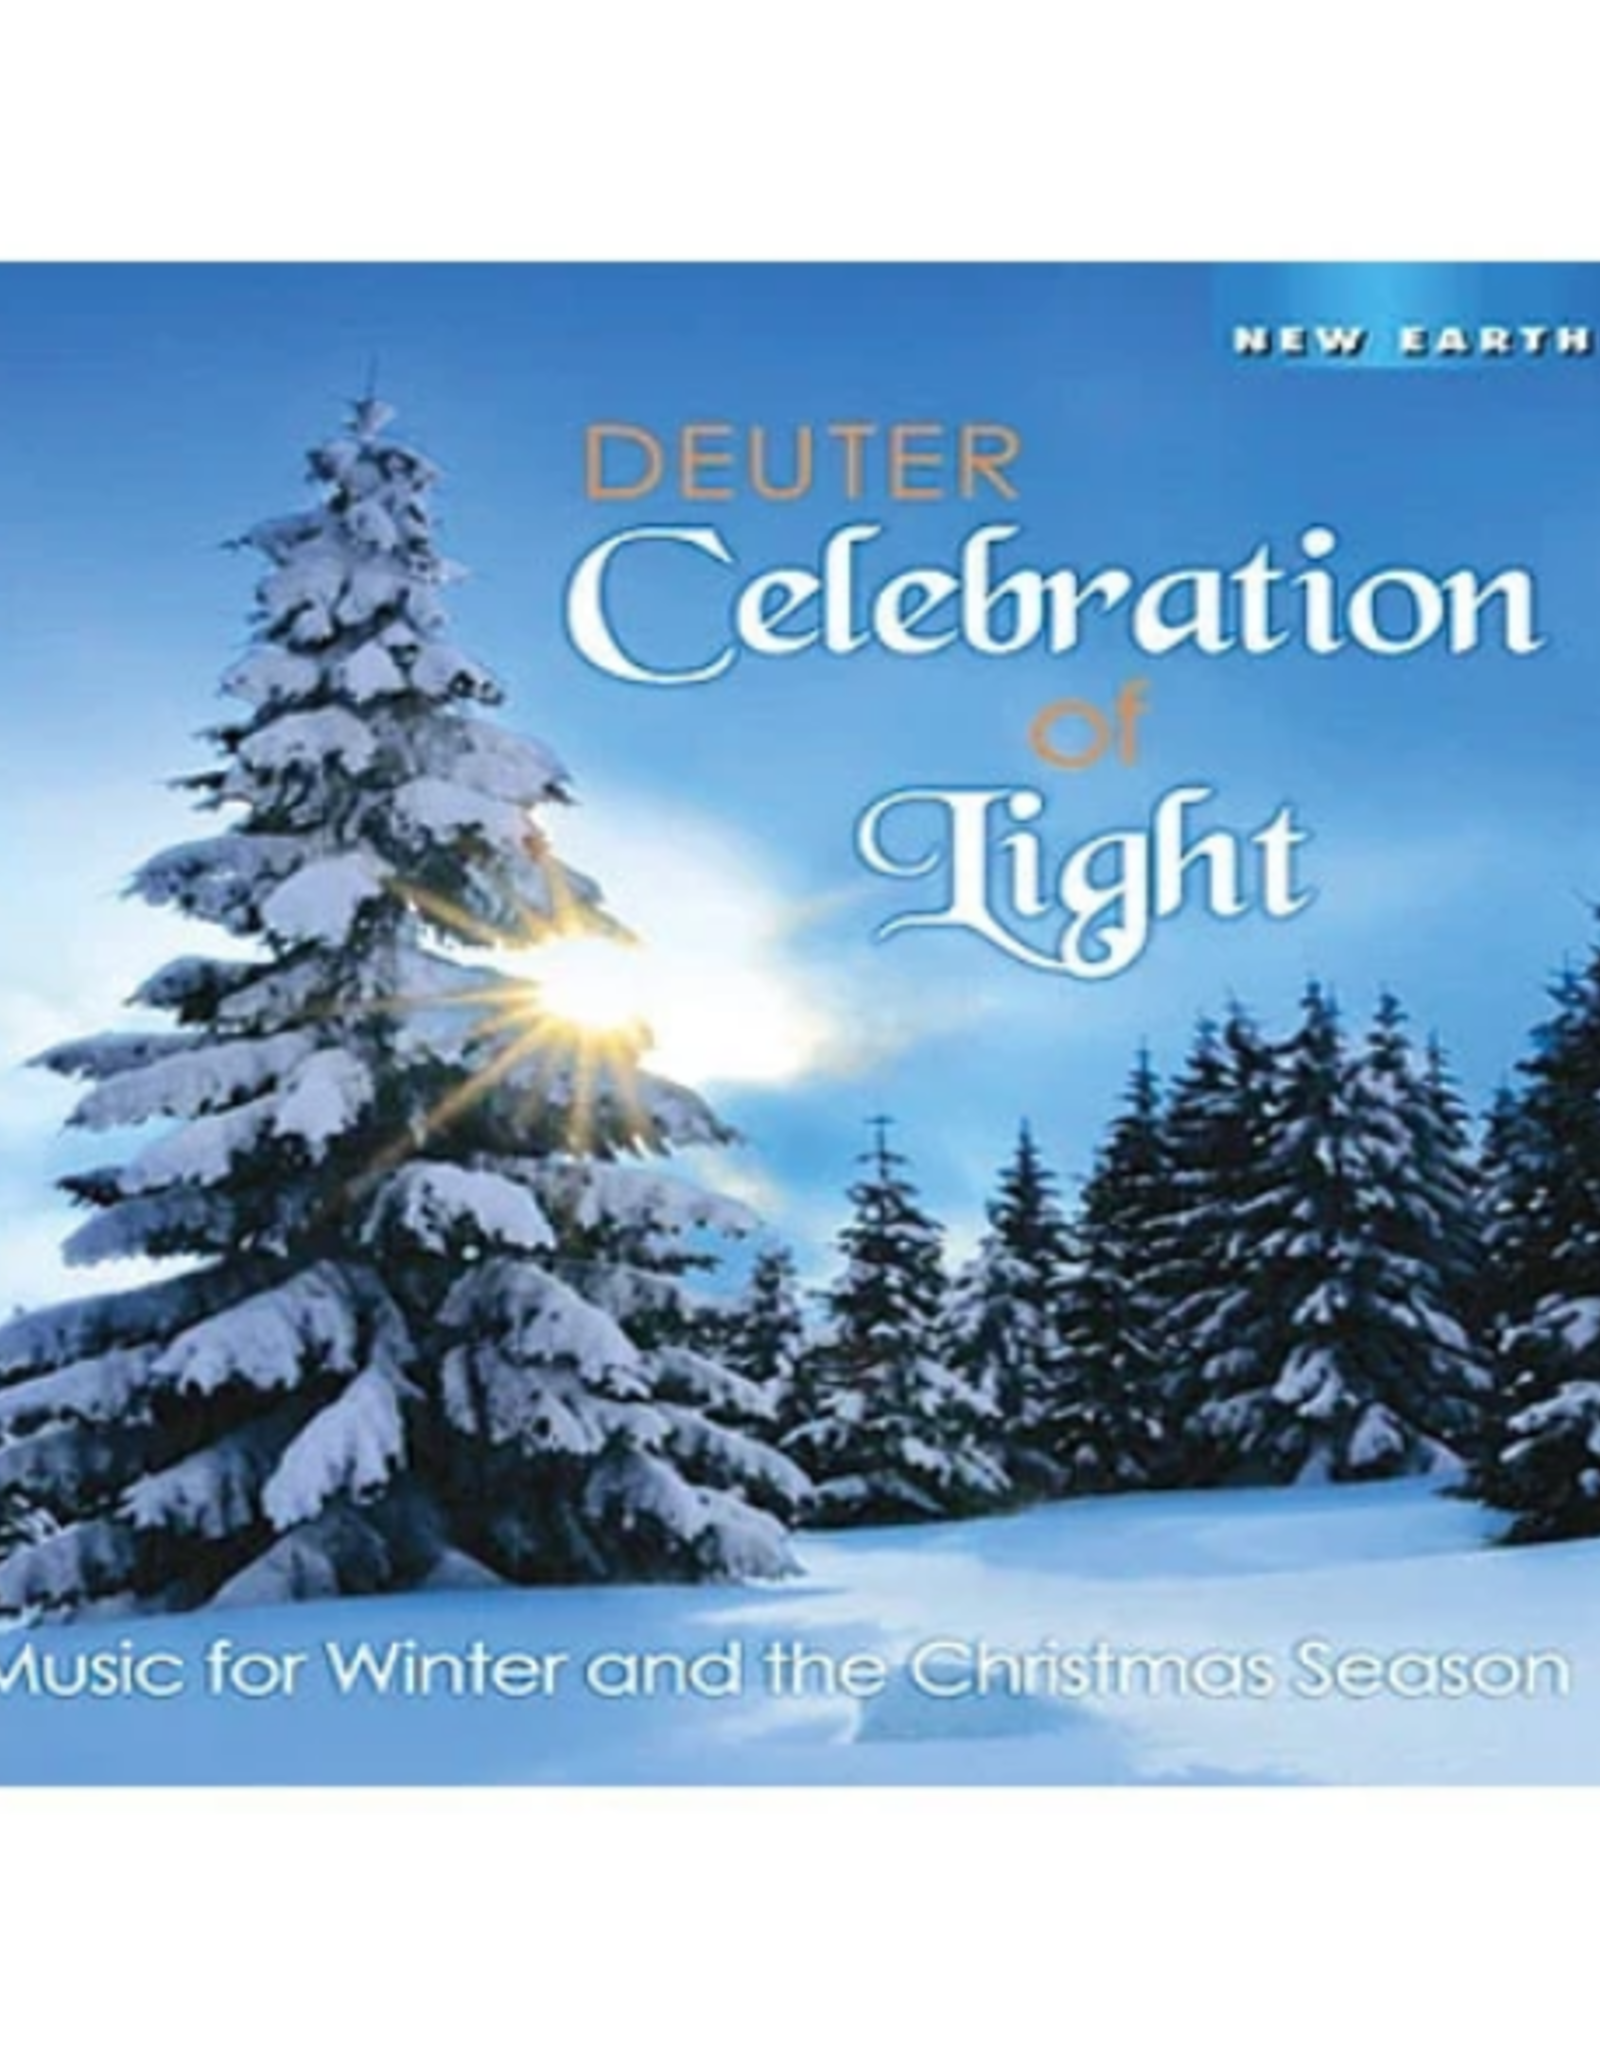 Deuter Celebration of Light CD by Deuter